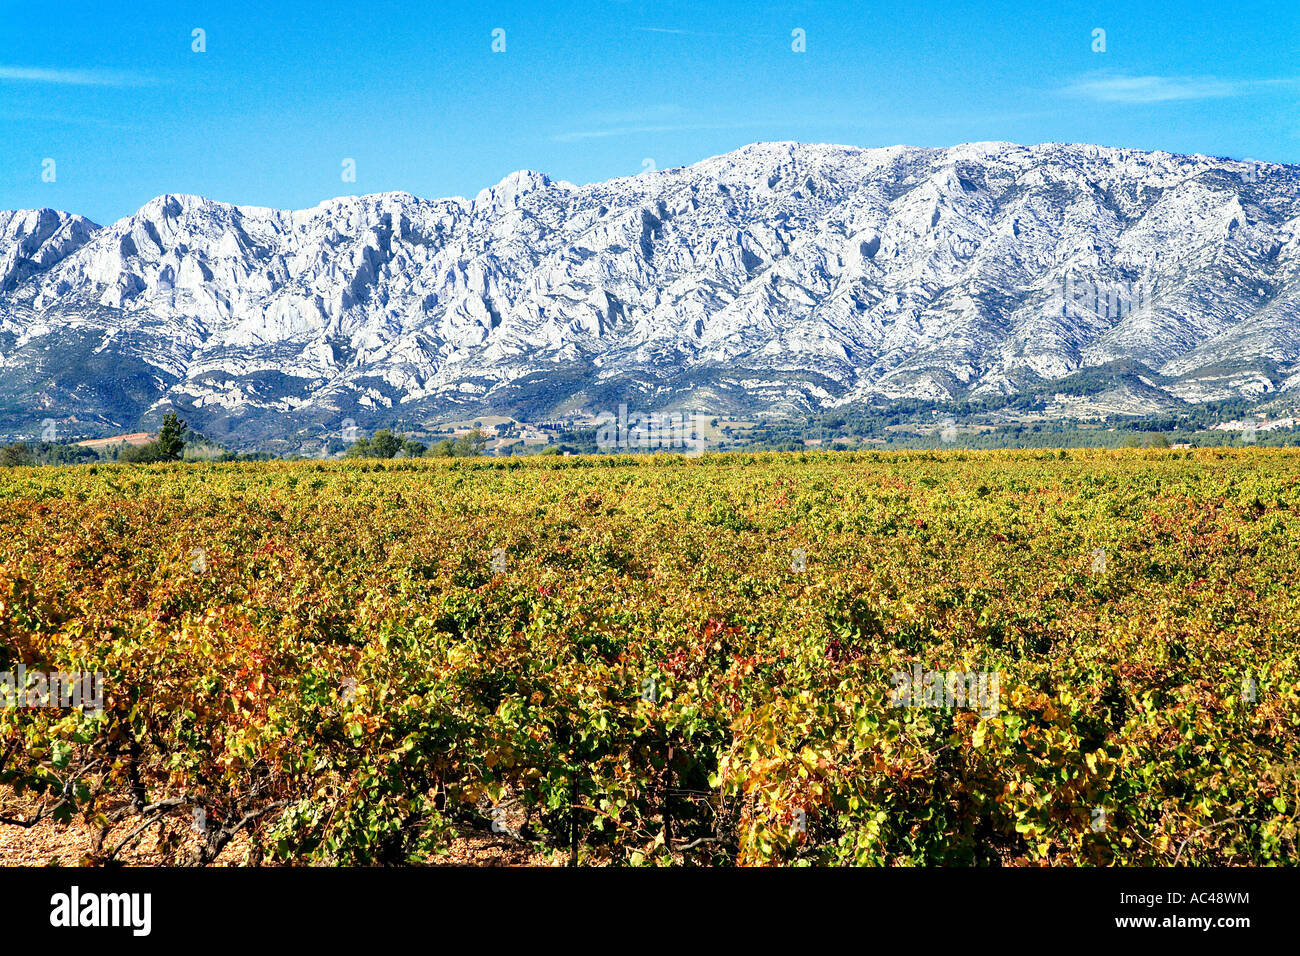 Vineyards aroud the Montagne Sainte Victoire, Provence, France. Stock Photo